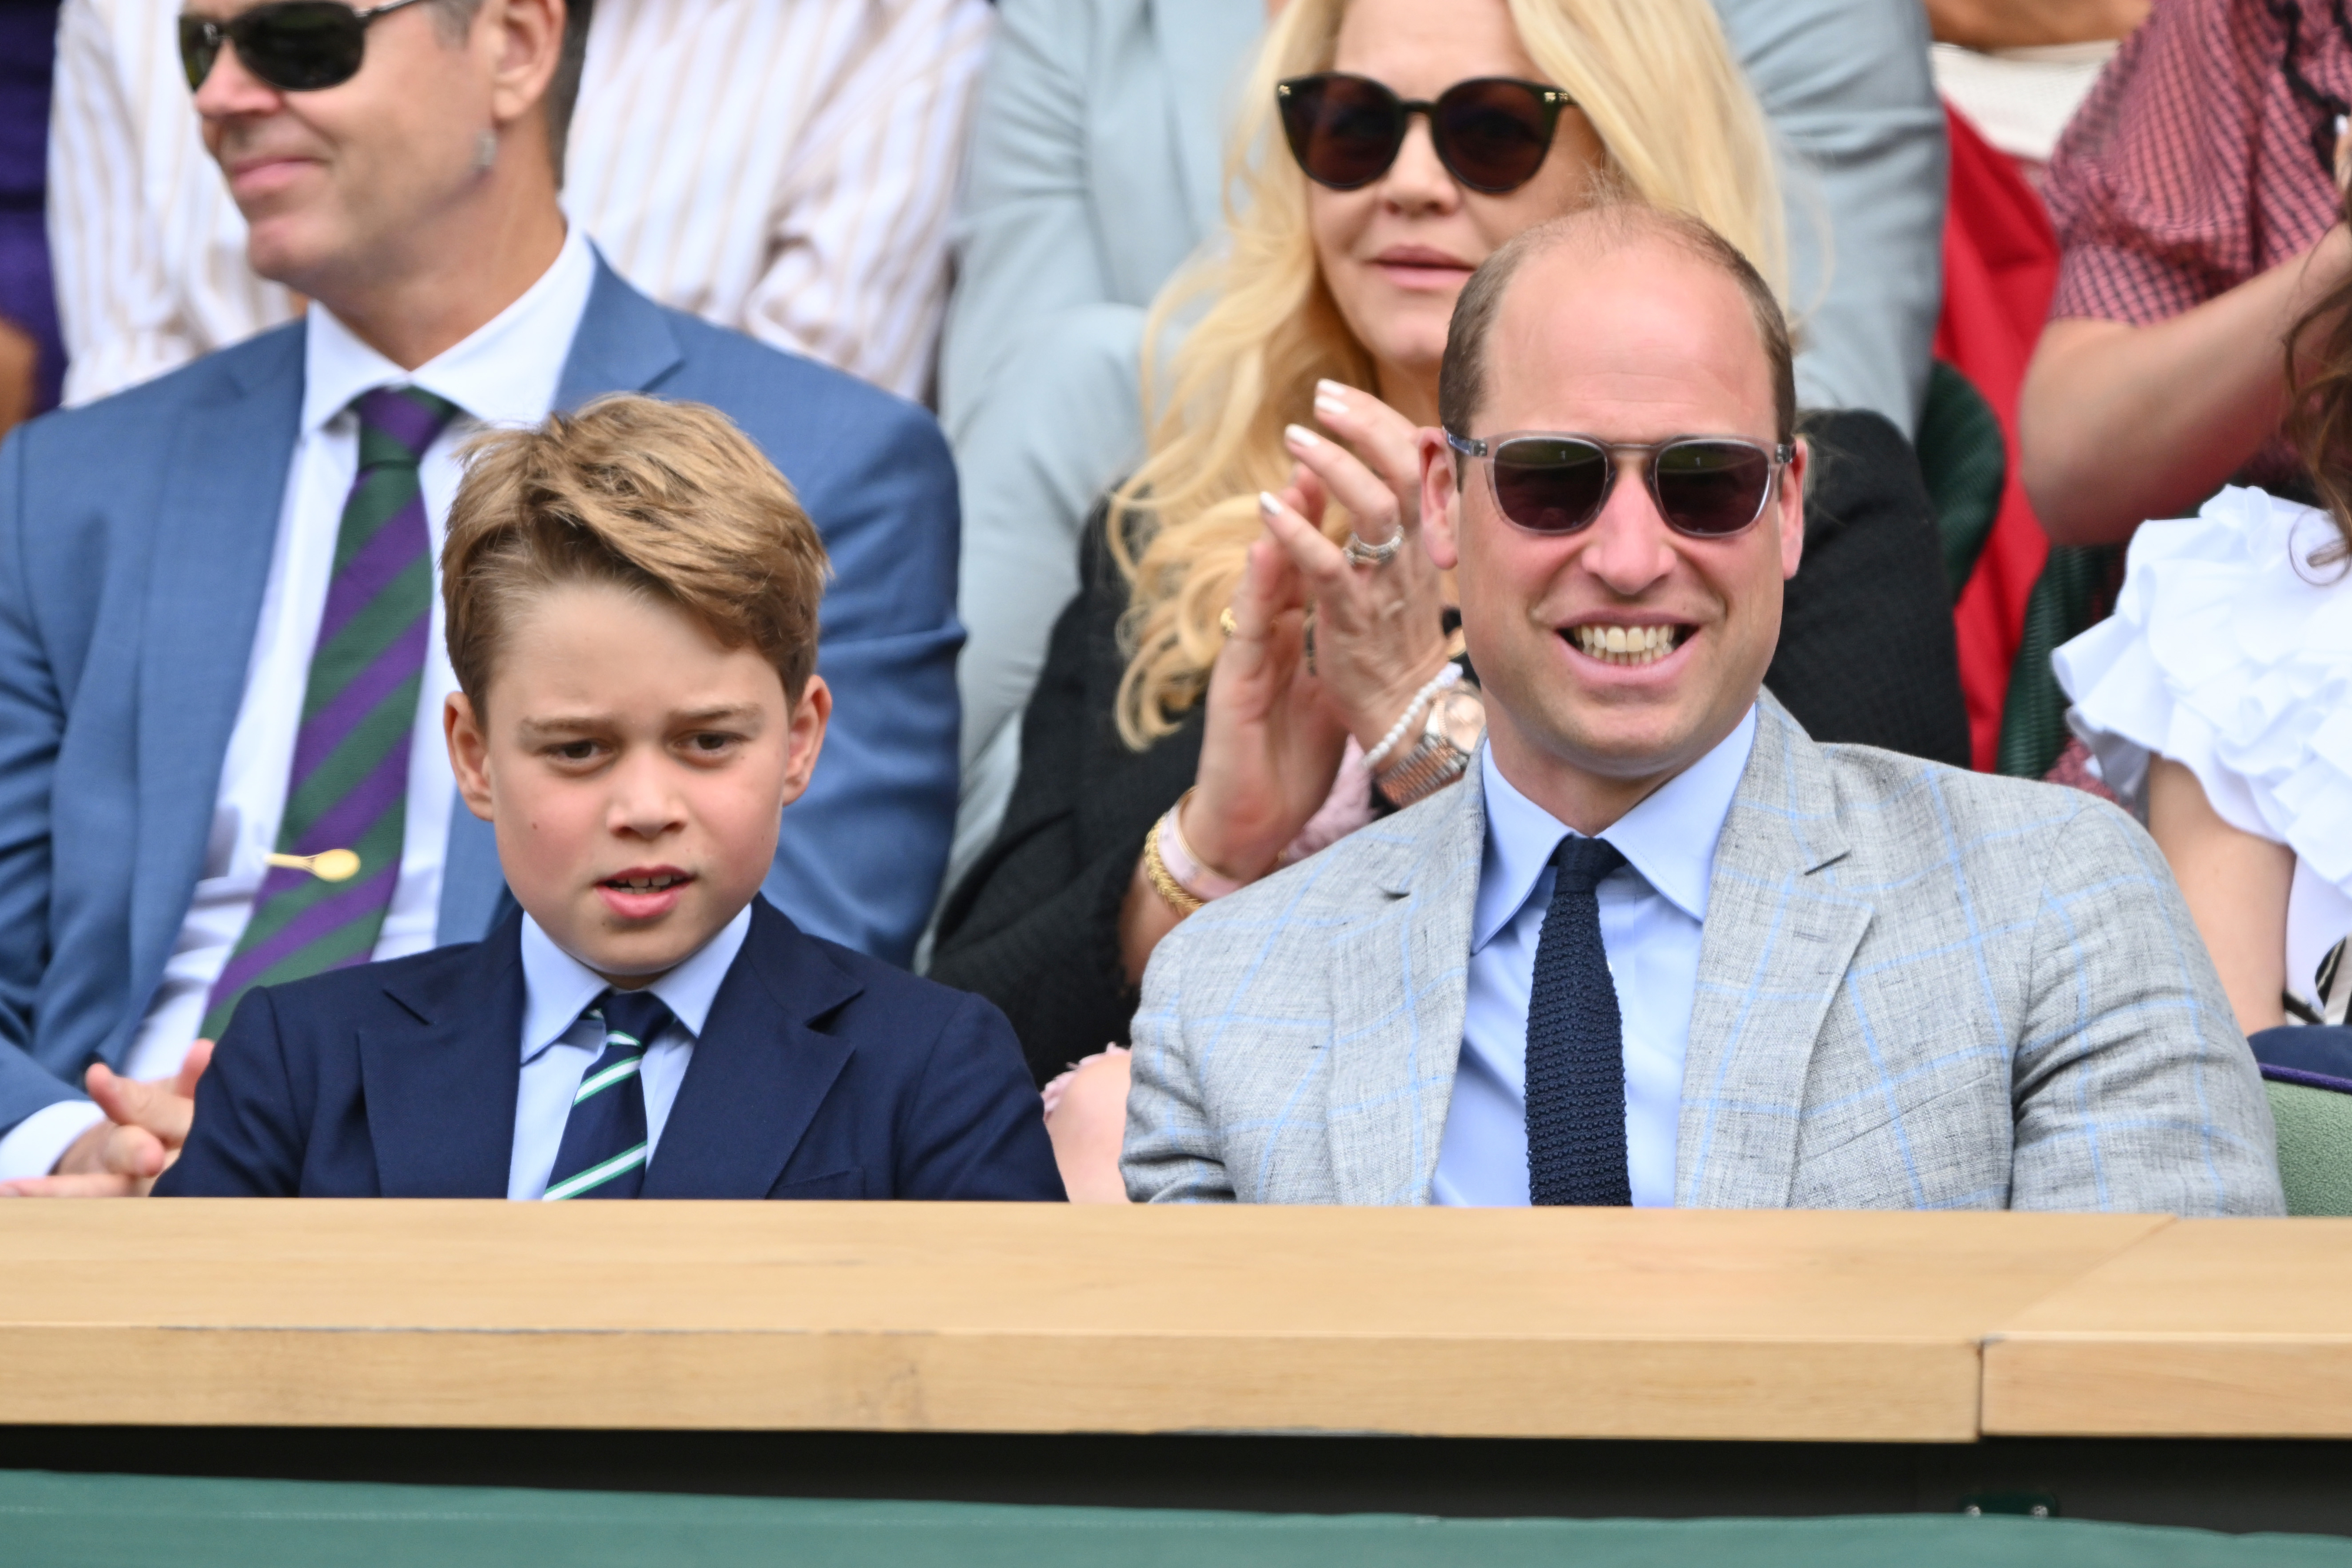 George next to William, wearing sunglasses